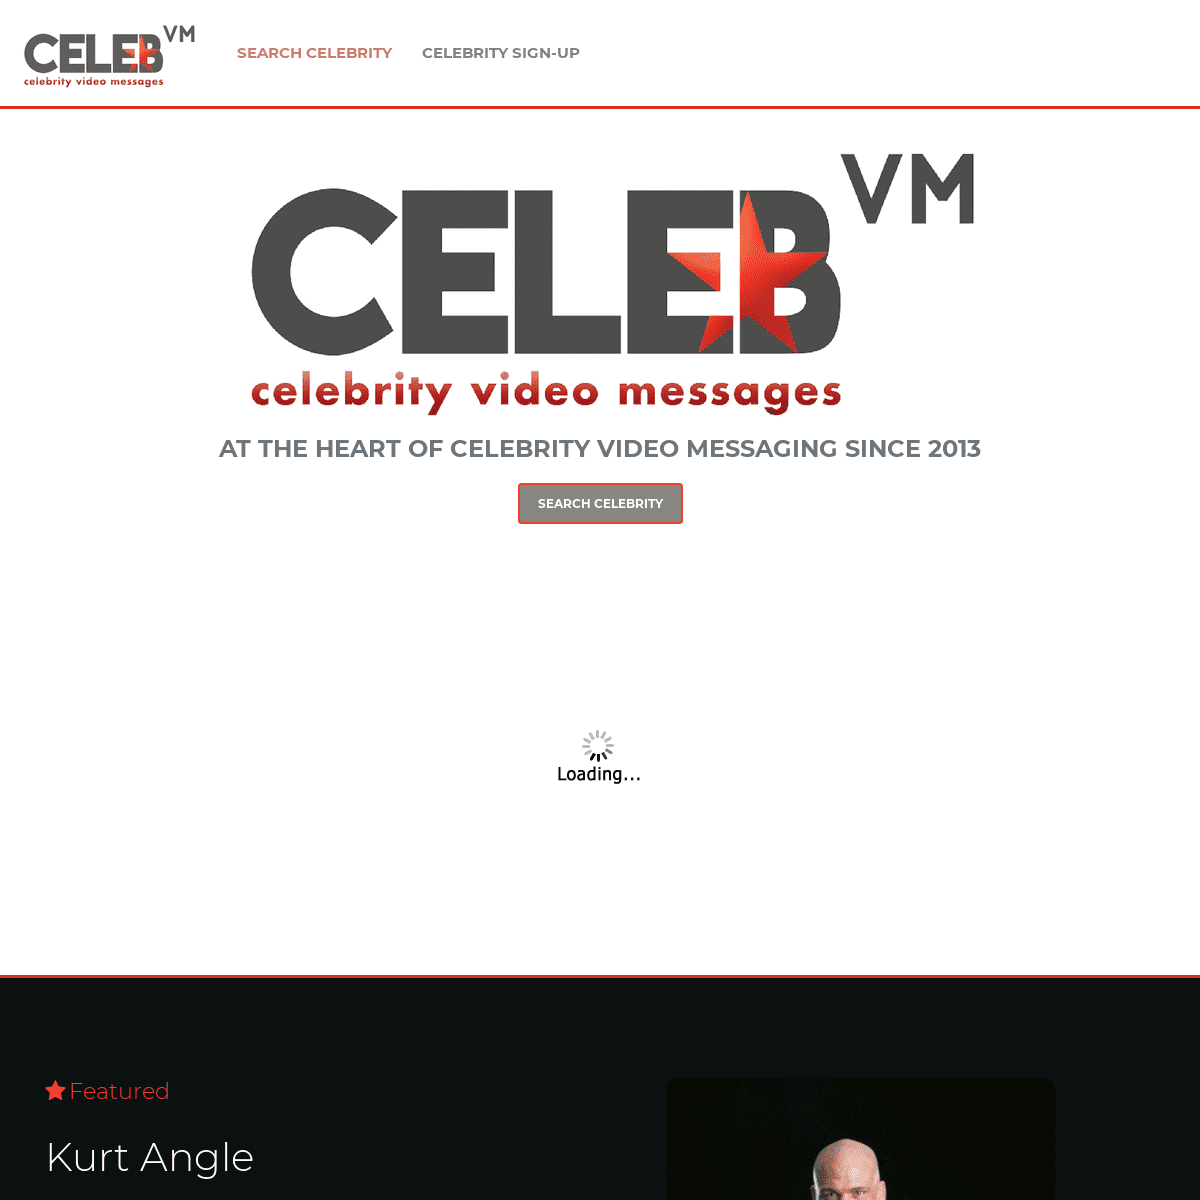 A complete backup of celebvm.com